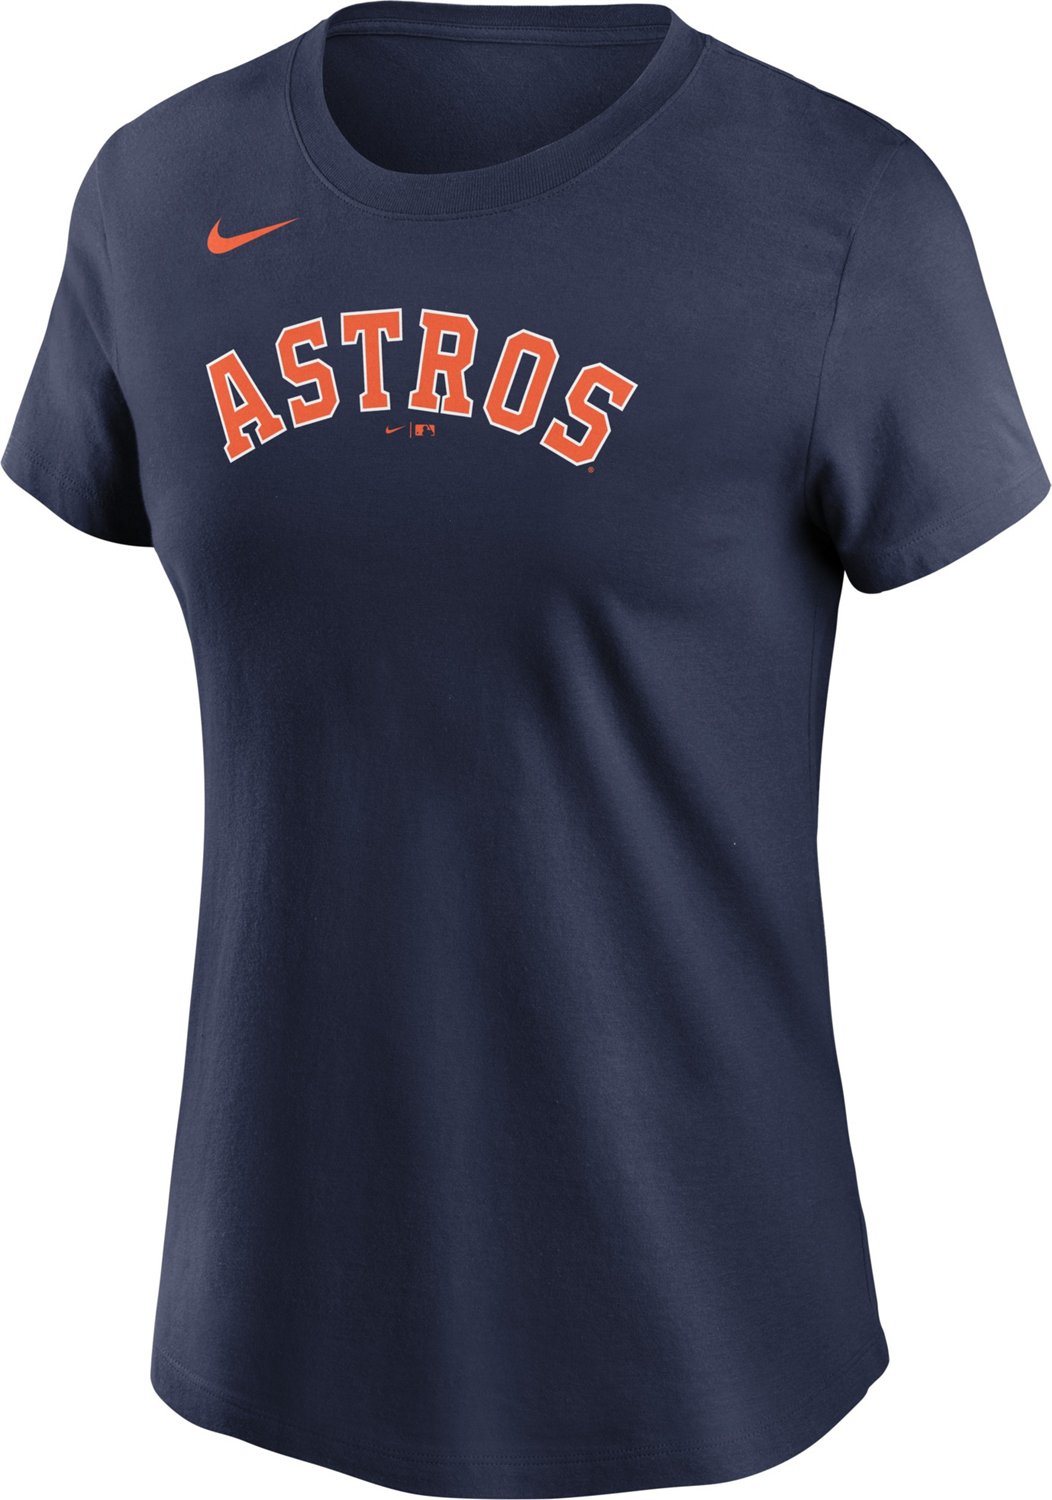 Astros T-shirts | Academy